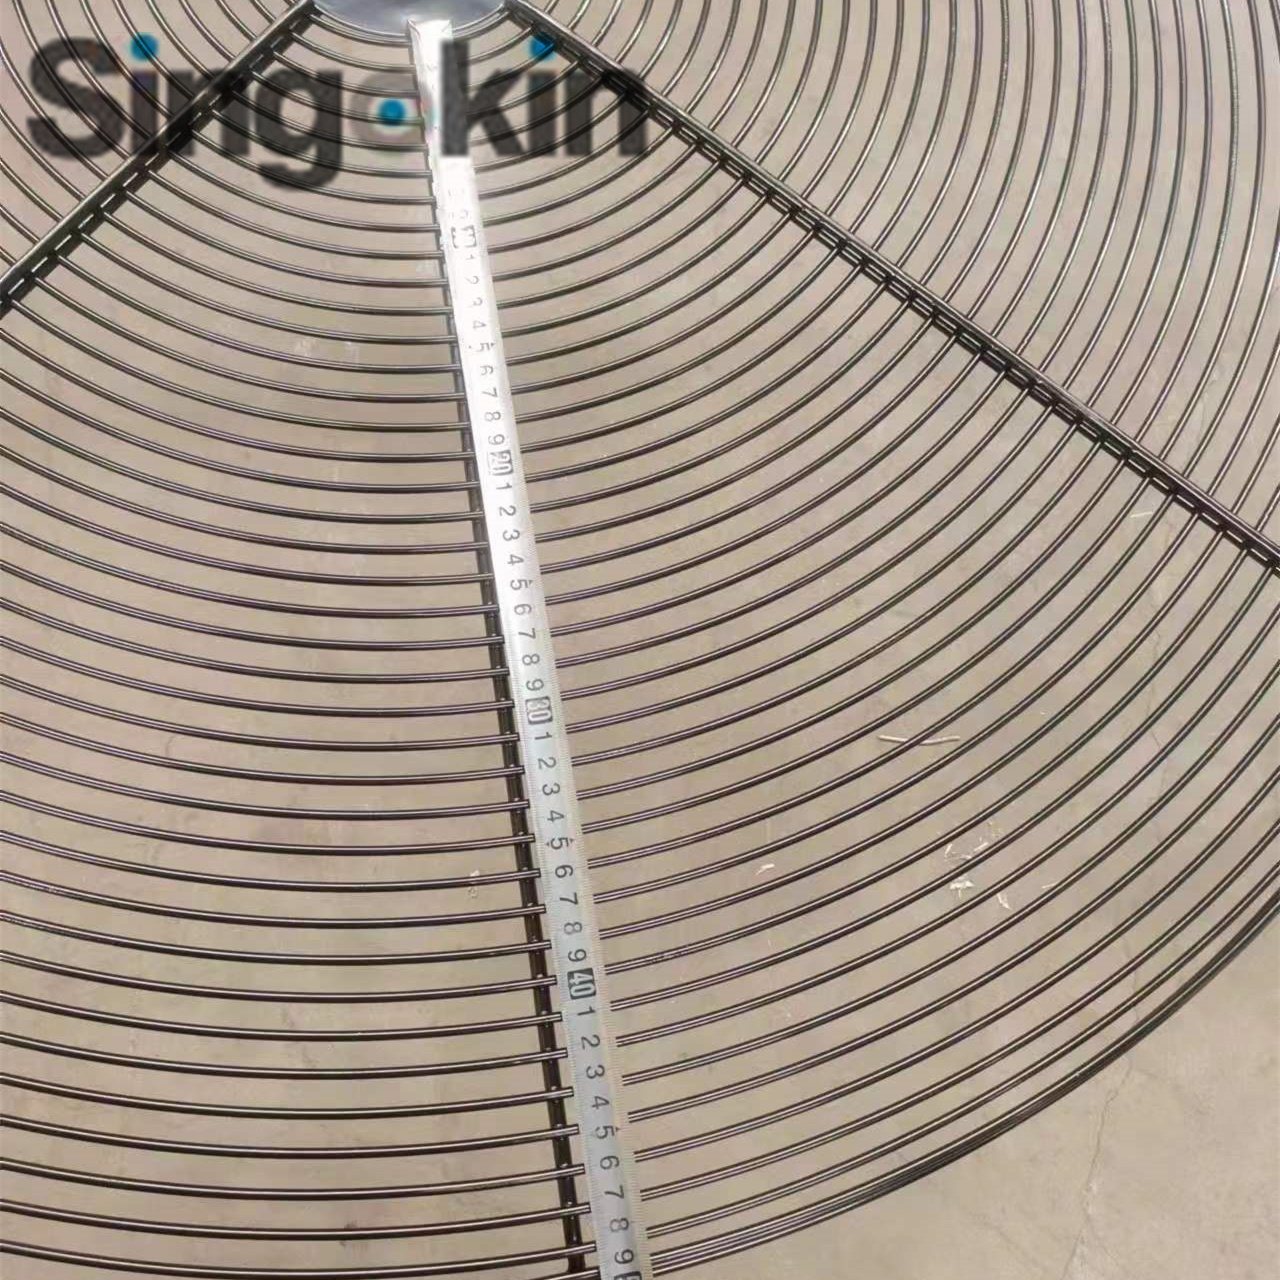 Wire fan grill guard for industrial exhaust fan cover